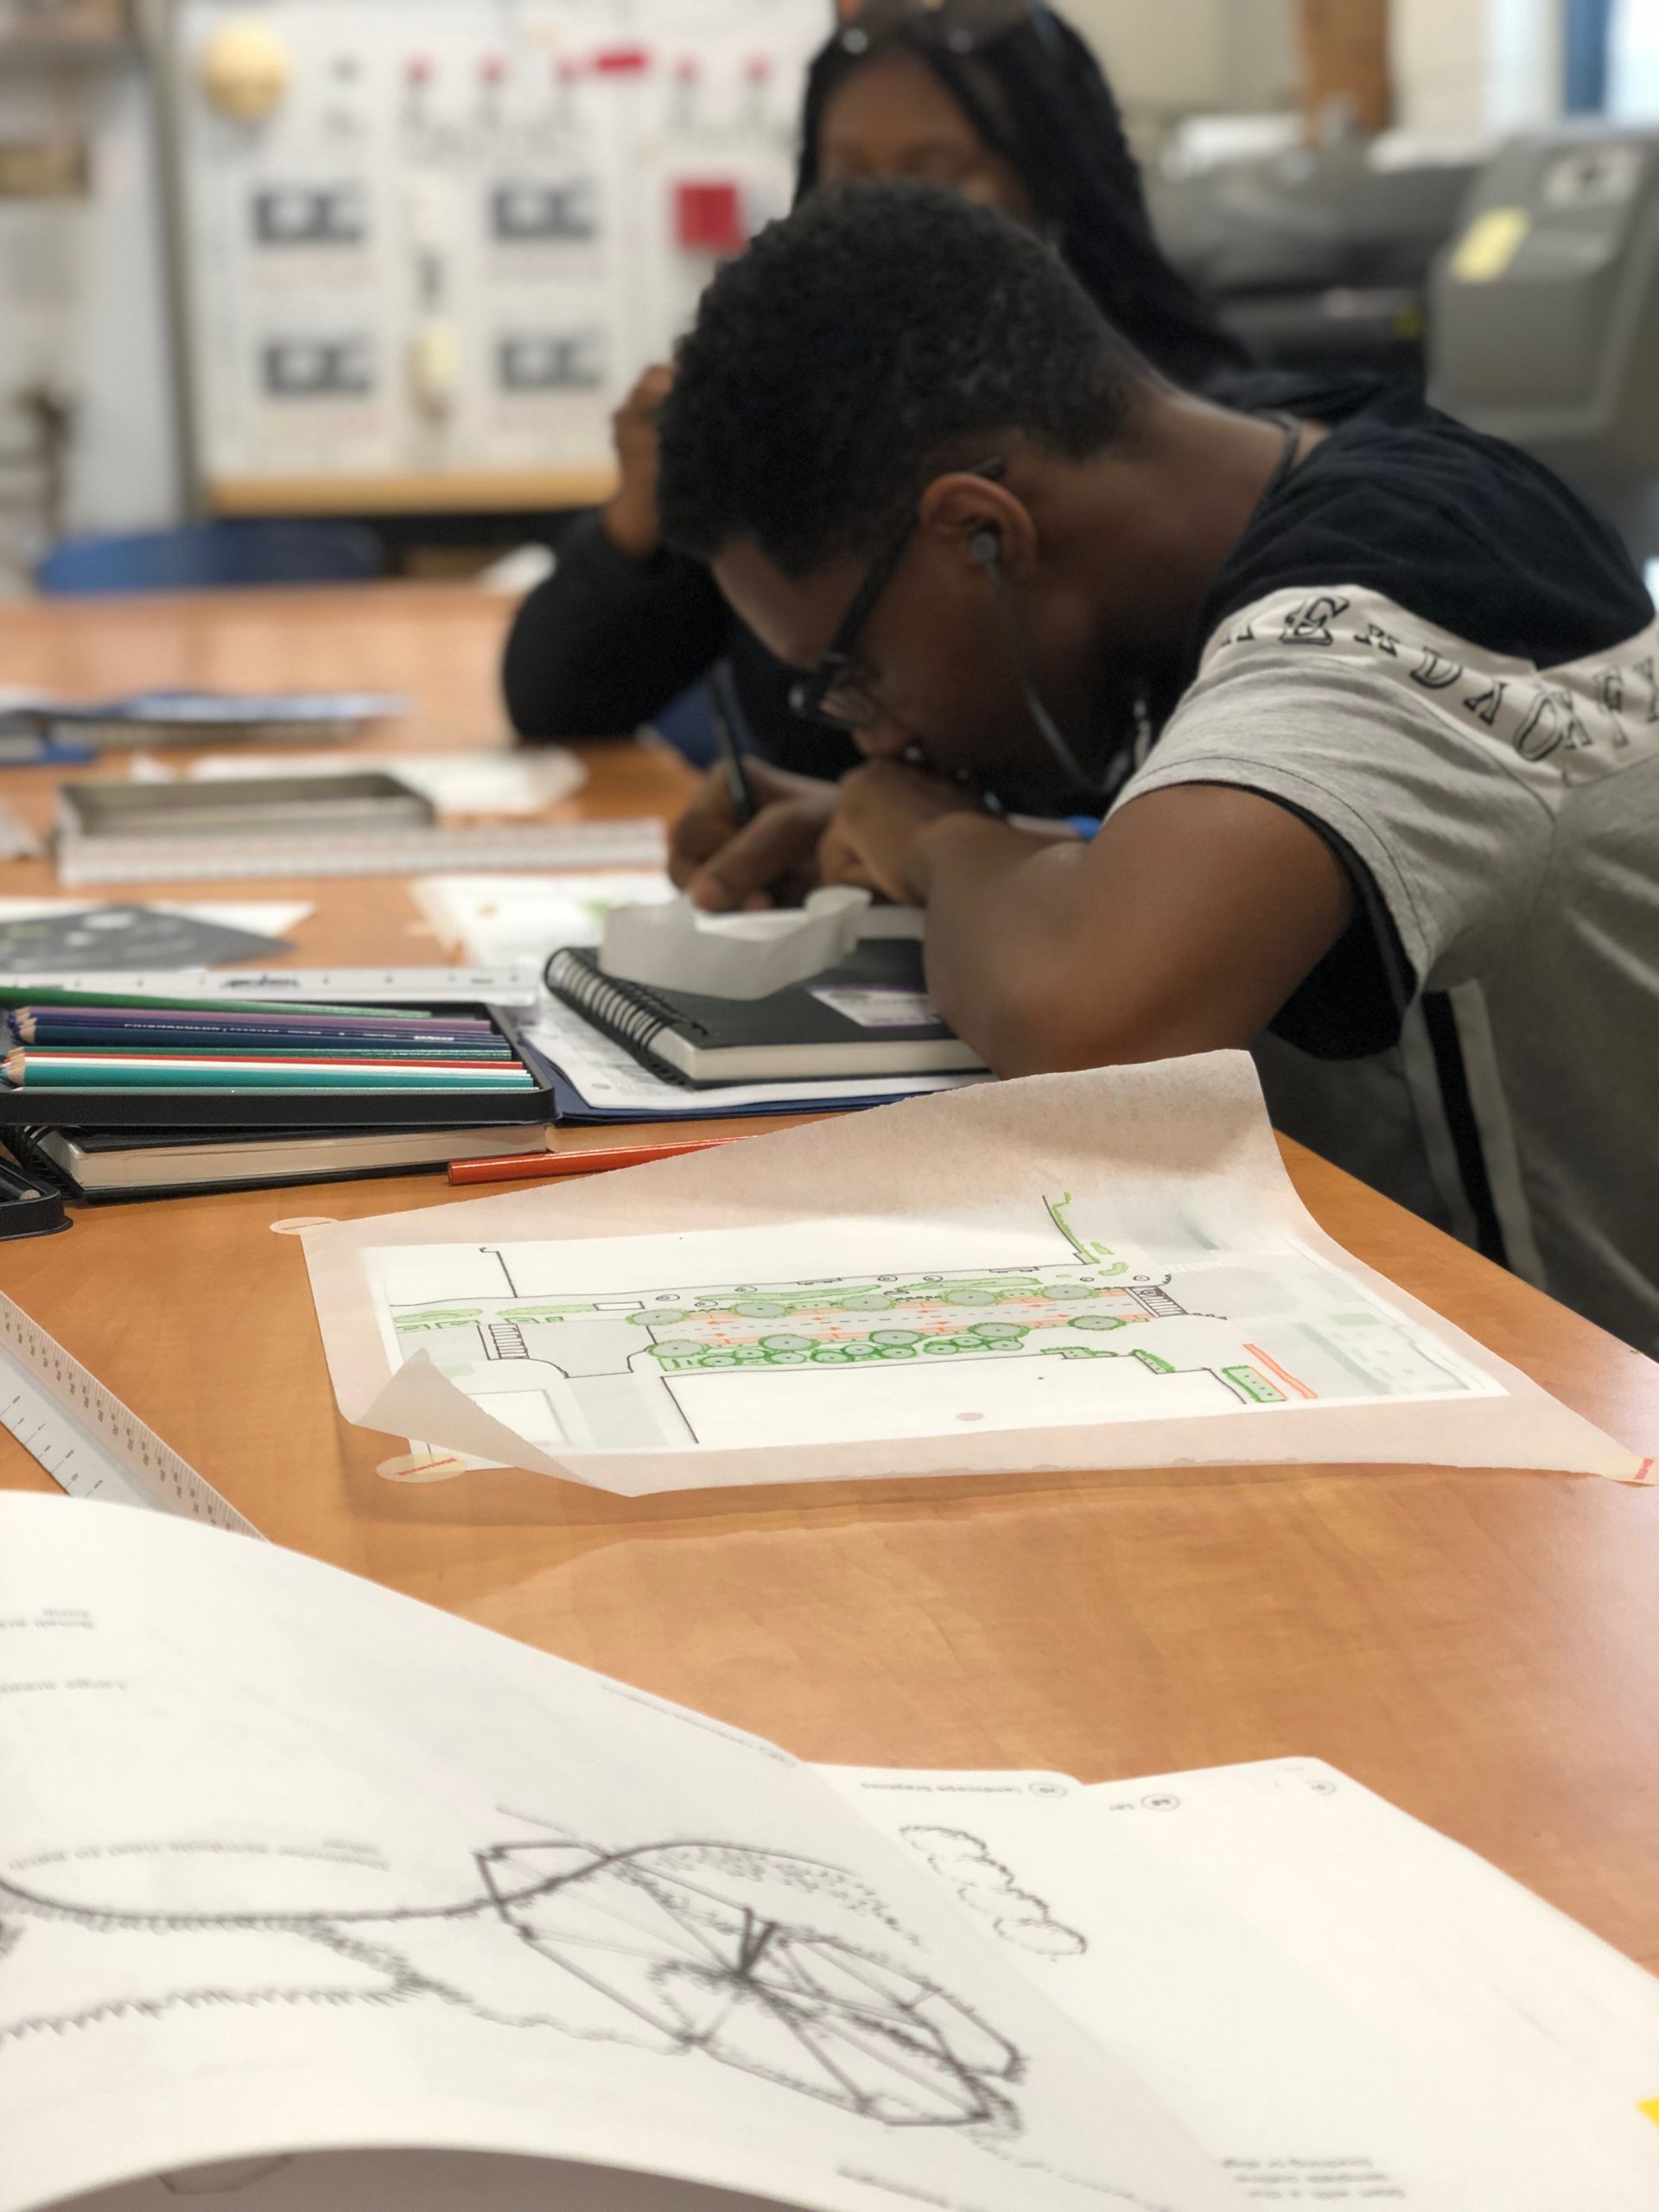 High school senior Quentin, a participant in The Studio DC, draws a plan of trees in bioretention in a Washington, D.C. landscape.